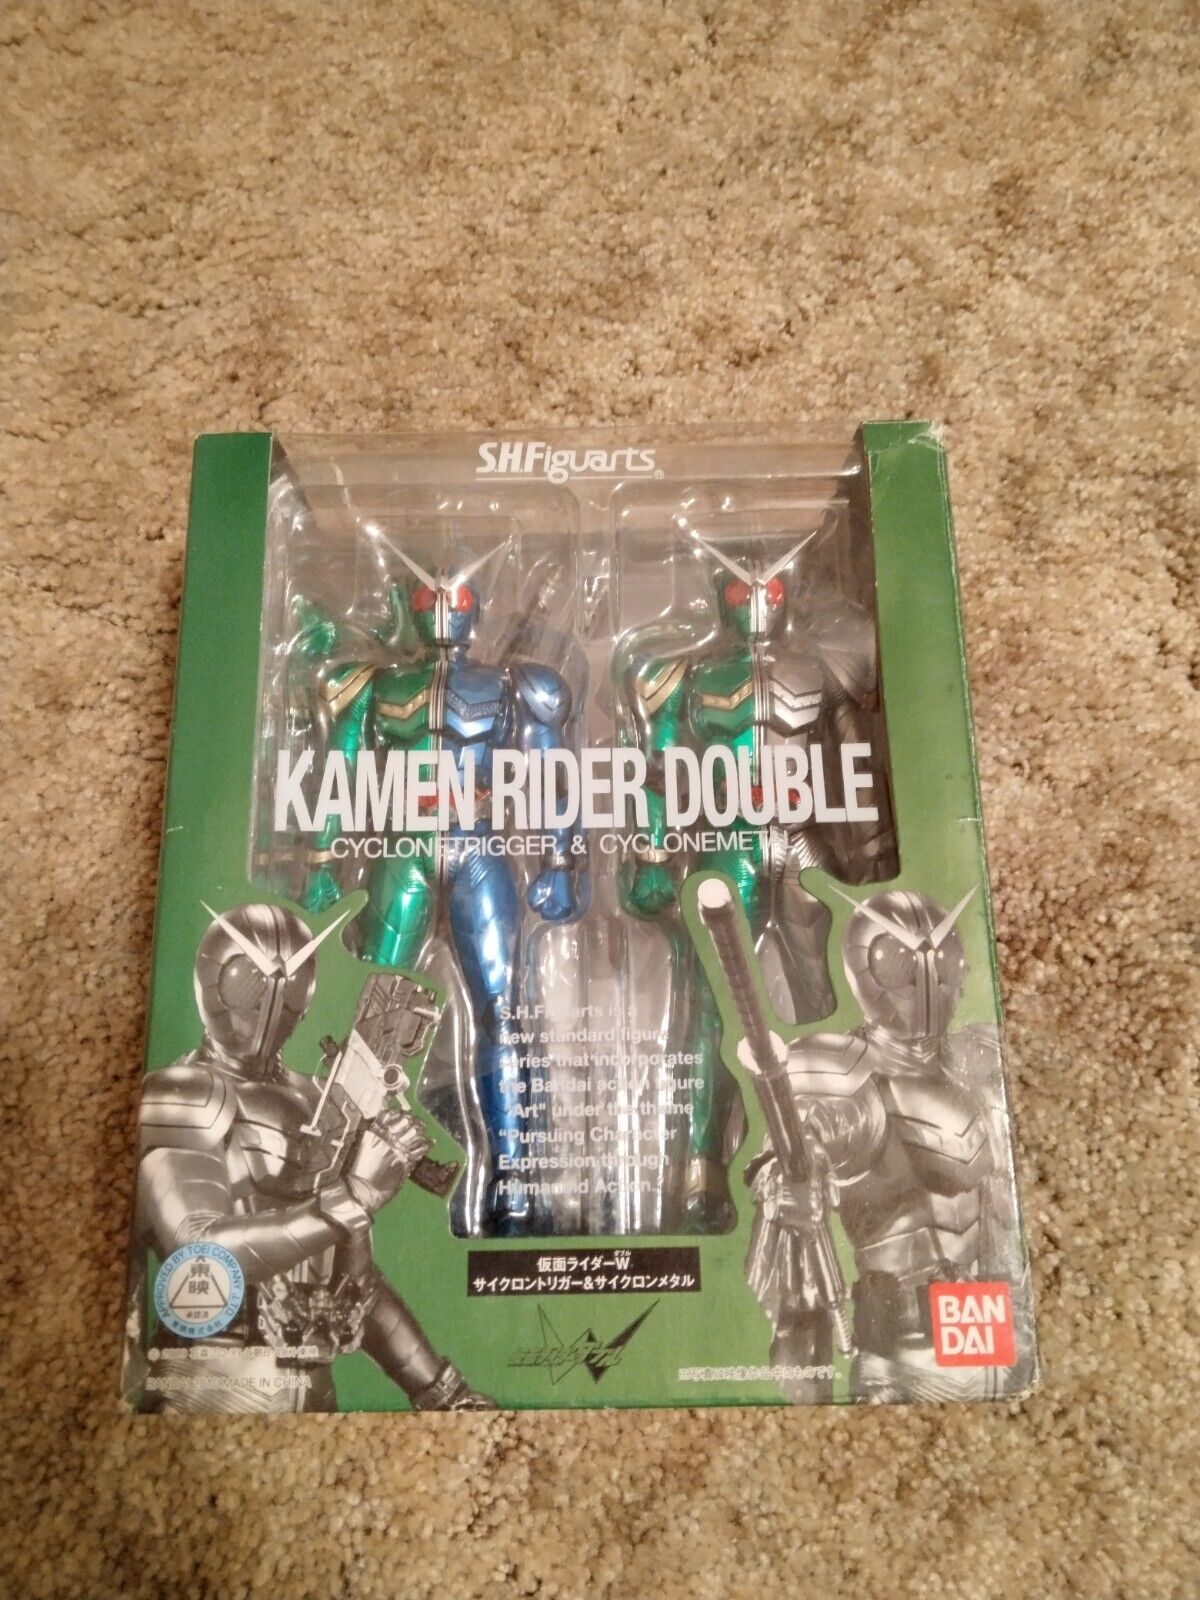 S. H. Figuarts Kamen Rider W (Double) Cyclone Trigger & Cyclone Metal